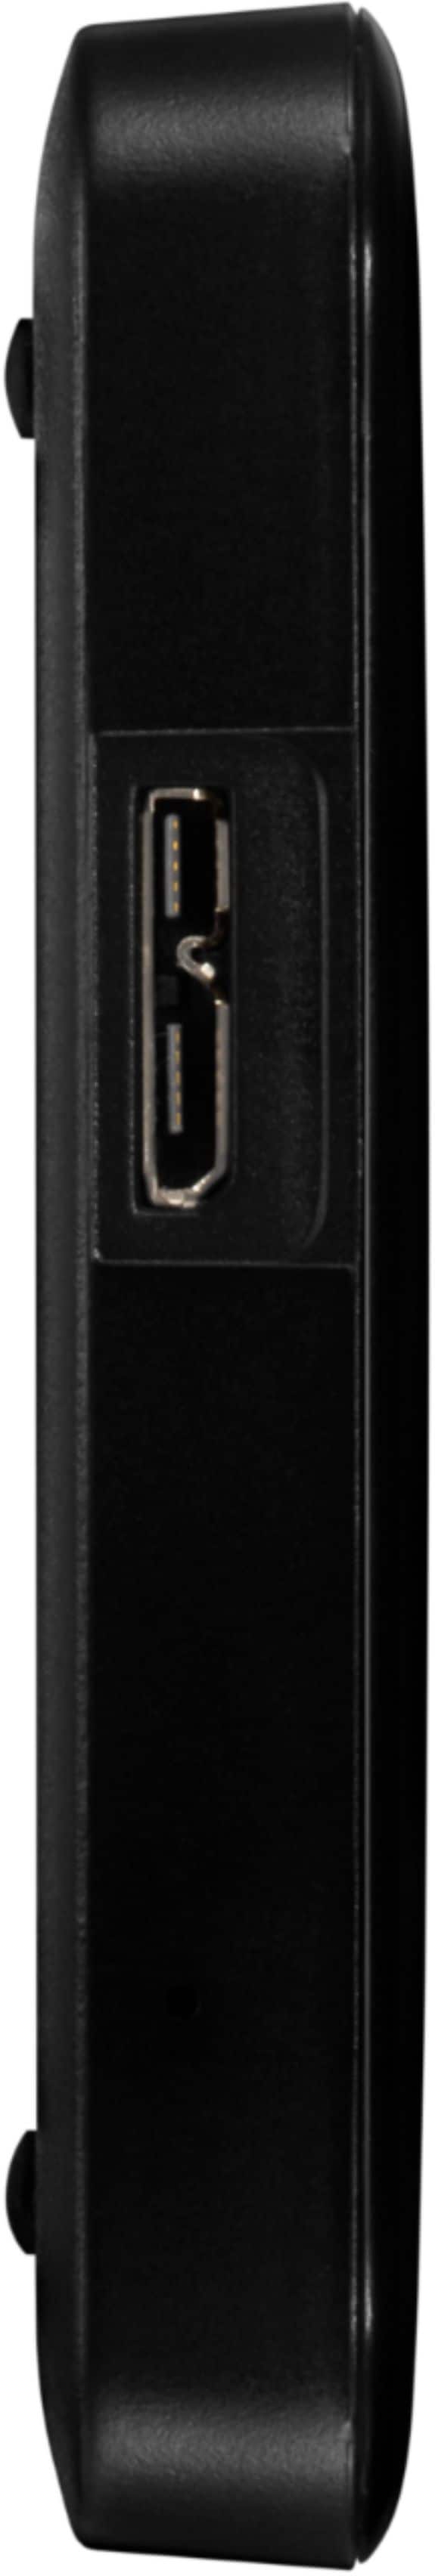 WD - Easystore 1TB External USB 3.0 Portable Hard Drive - Black_3